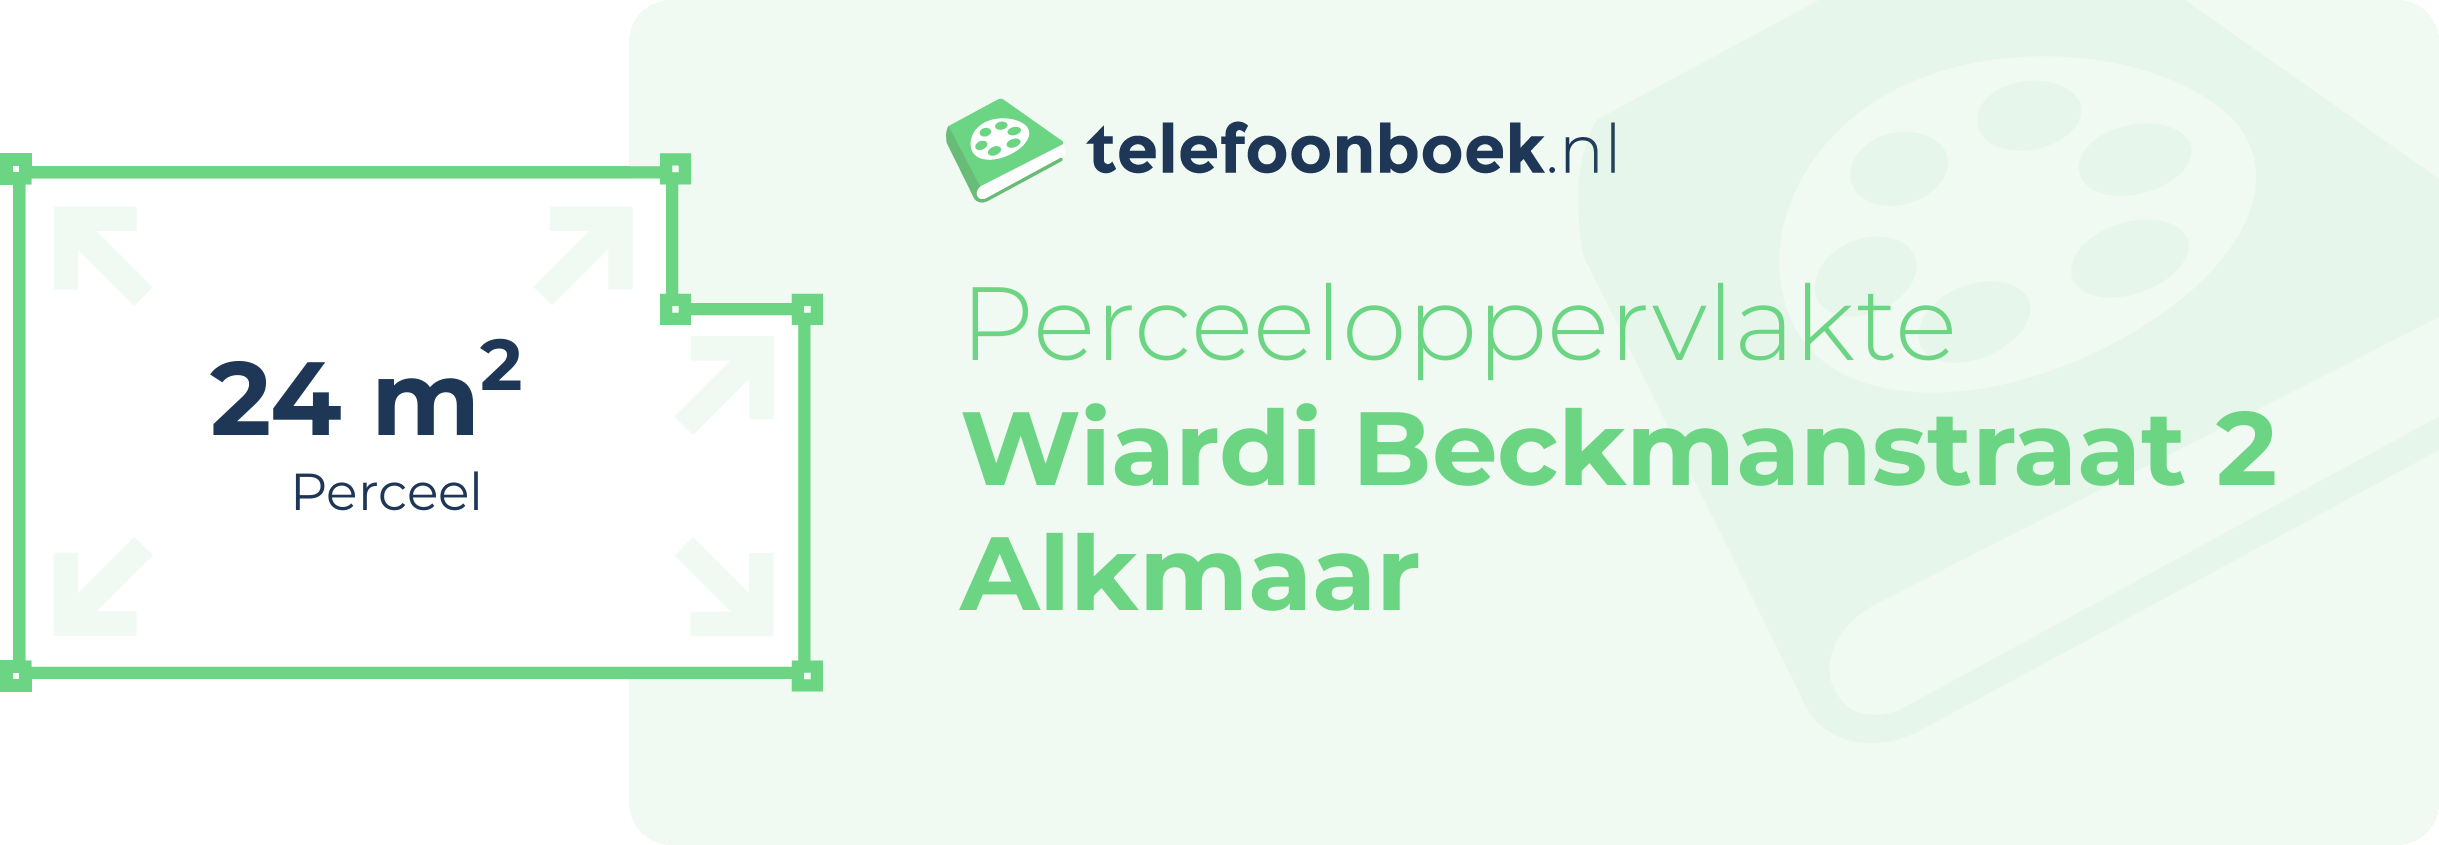 Perceeloppervlakte Wiardi Beckmanstraat 2 Alkmaar